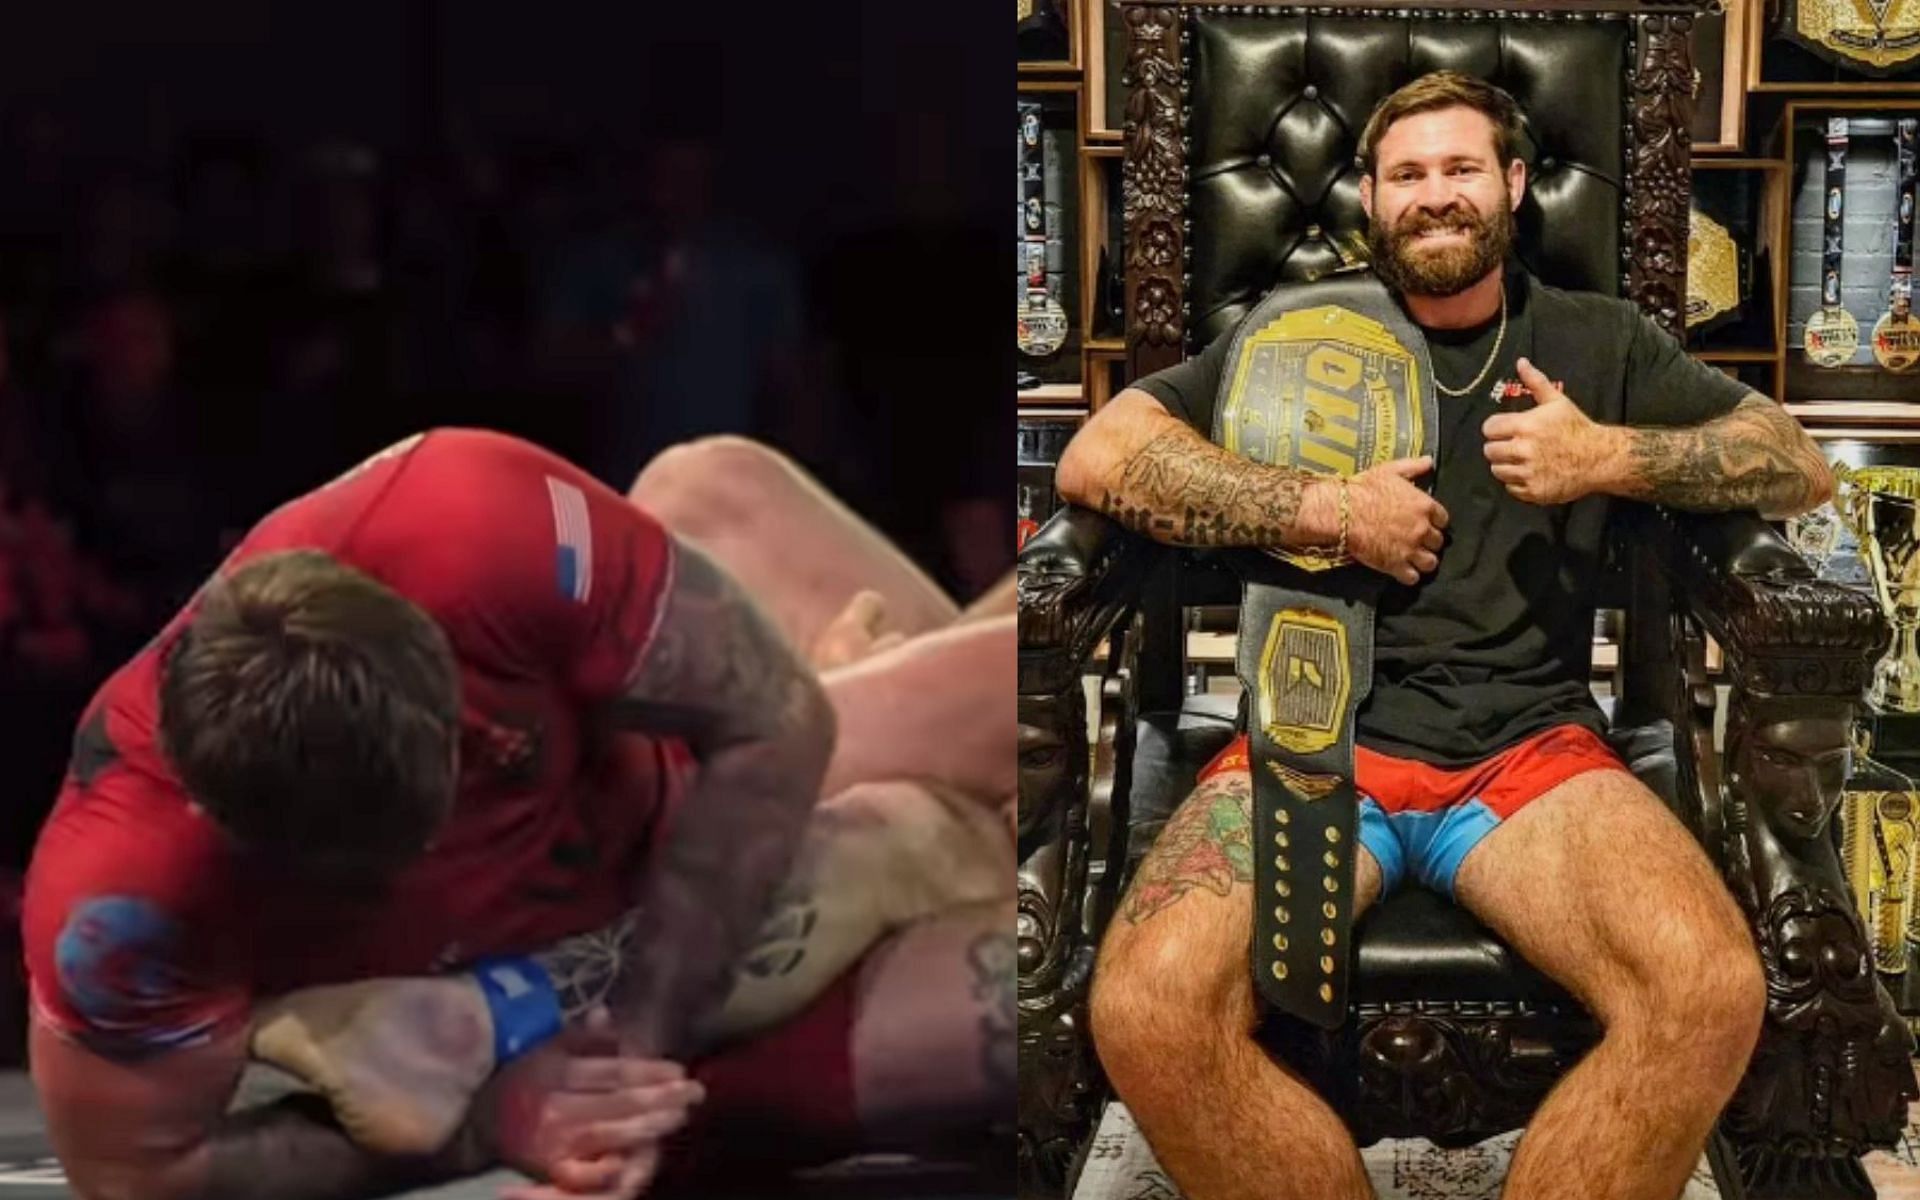 Gordon Ryan submits Josh Saunders at WNO 24 (left) and Ryan with heavyweight championship (right) [Images courtesy:@gordonlovesjiujitsu on Instagram]